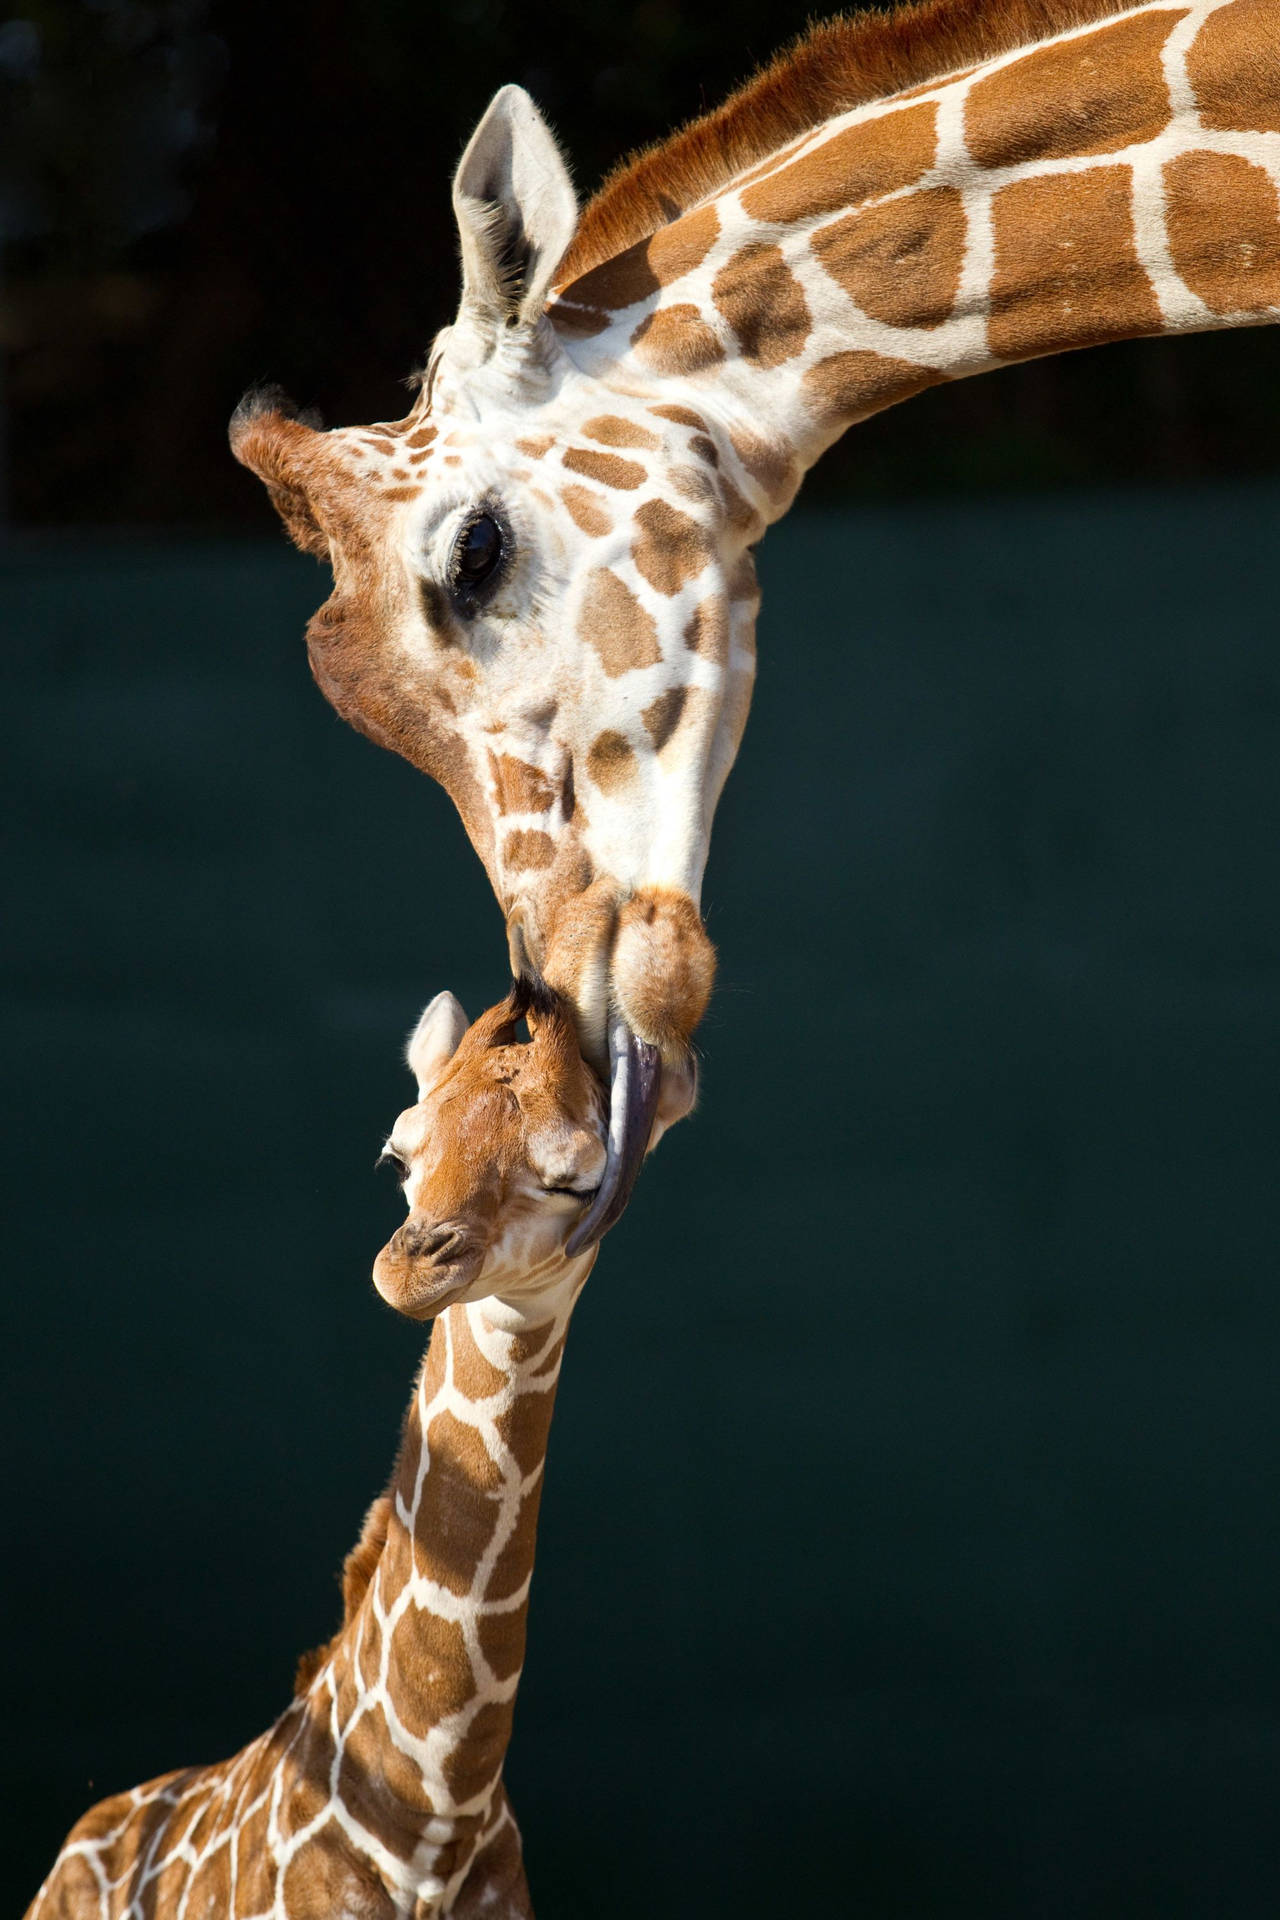 A Heartwarming Moment Between Mother And Baby Giraffe